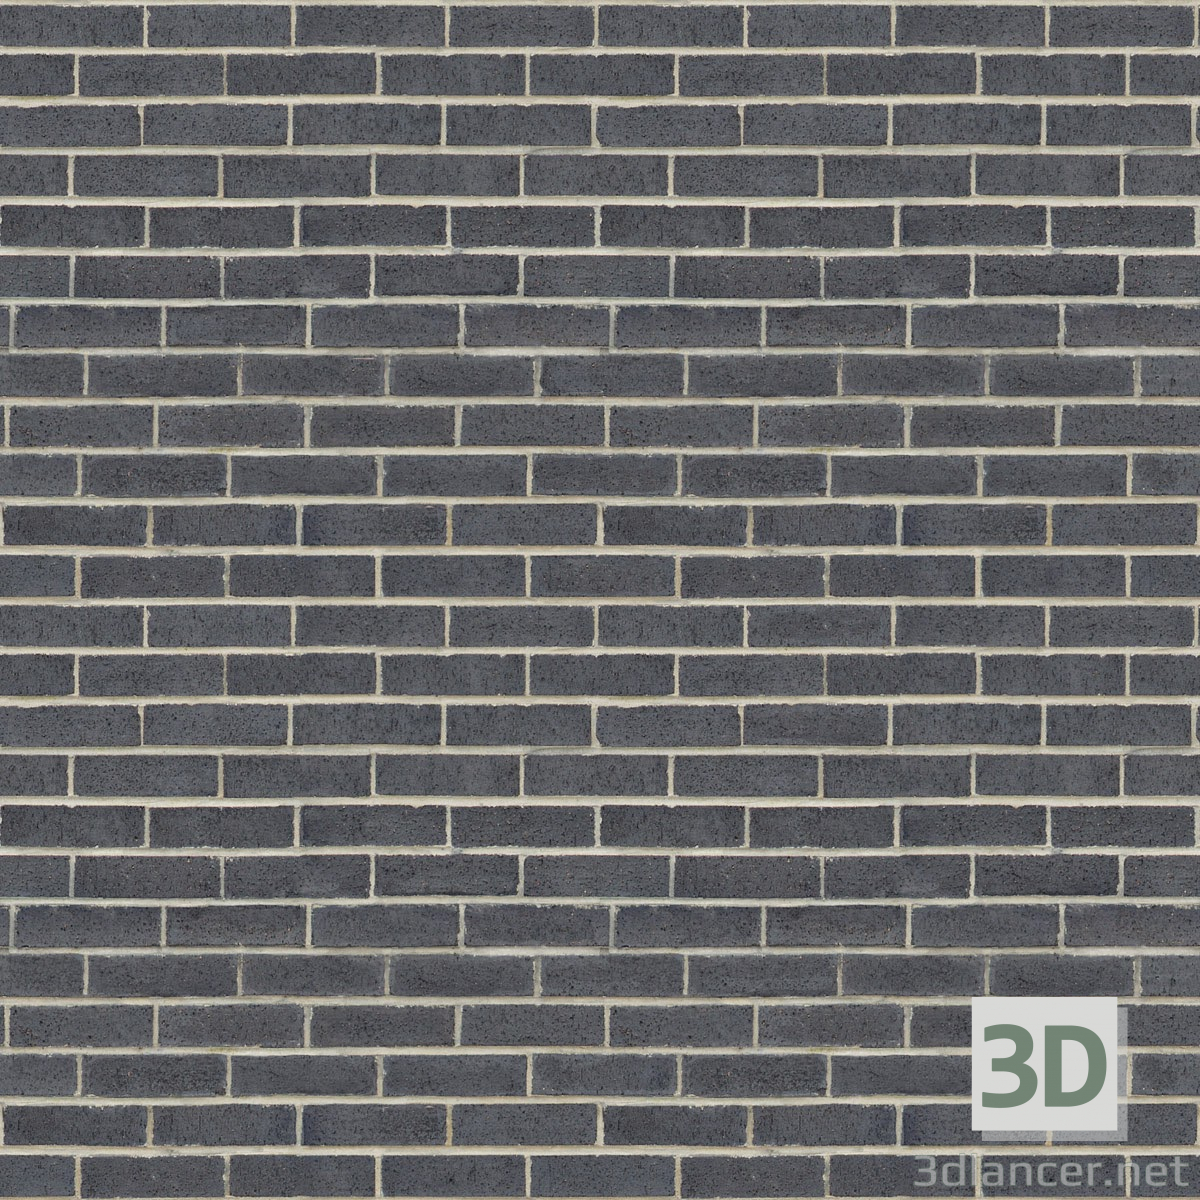 Texture brickwork 010 free download - image